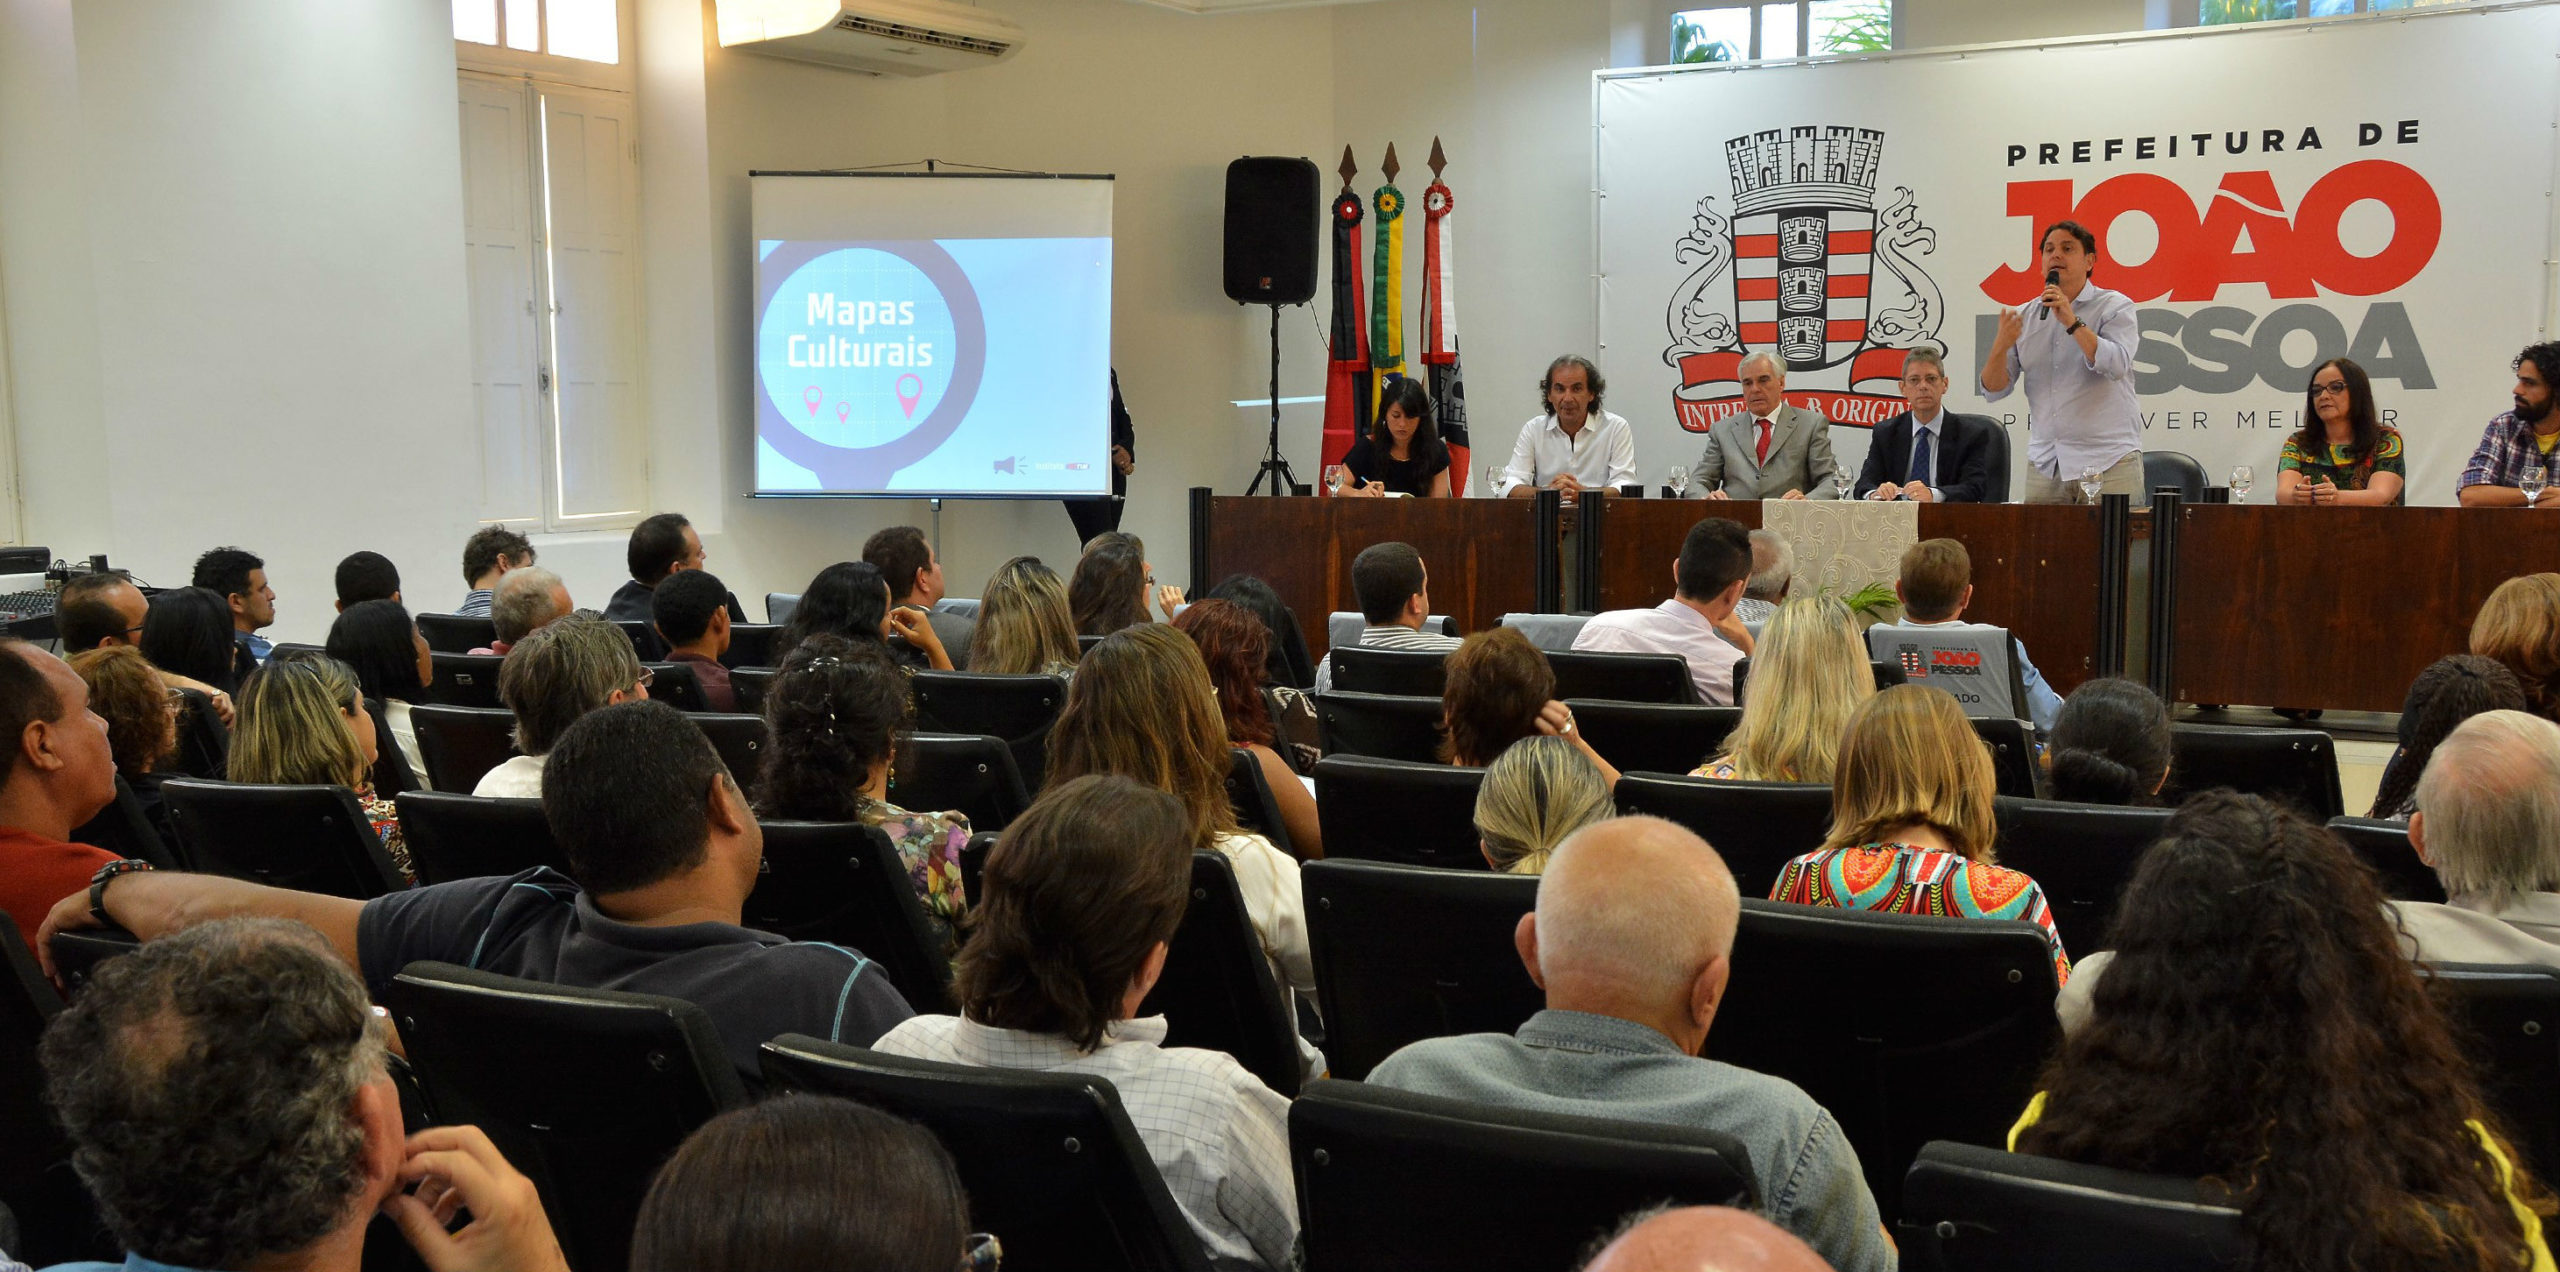 JP Cultura is launched in João Pessoa